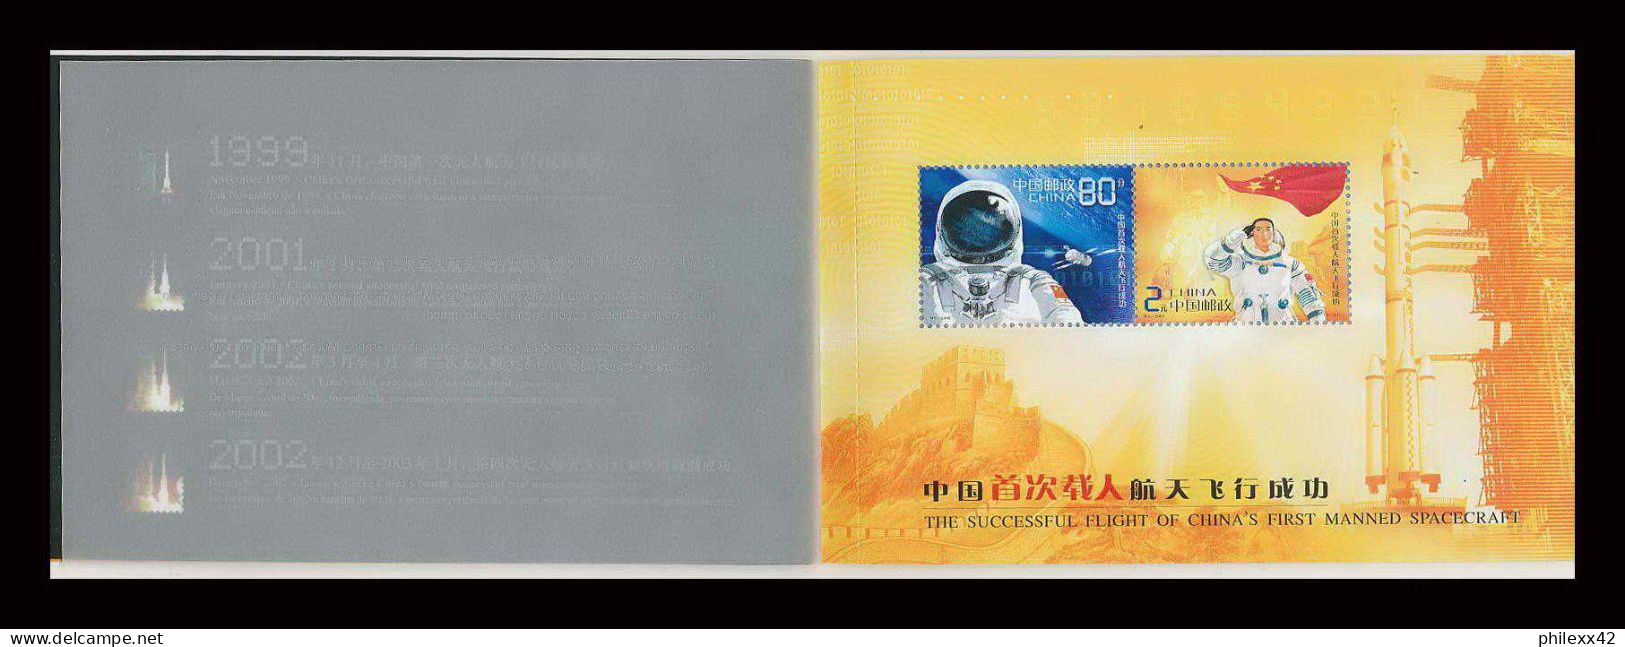 2339/ Espace (space) neuf ** MNH Chine (china)/hong kong / macau Taikonaute chinois, carnet 2003